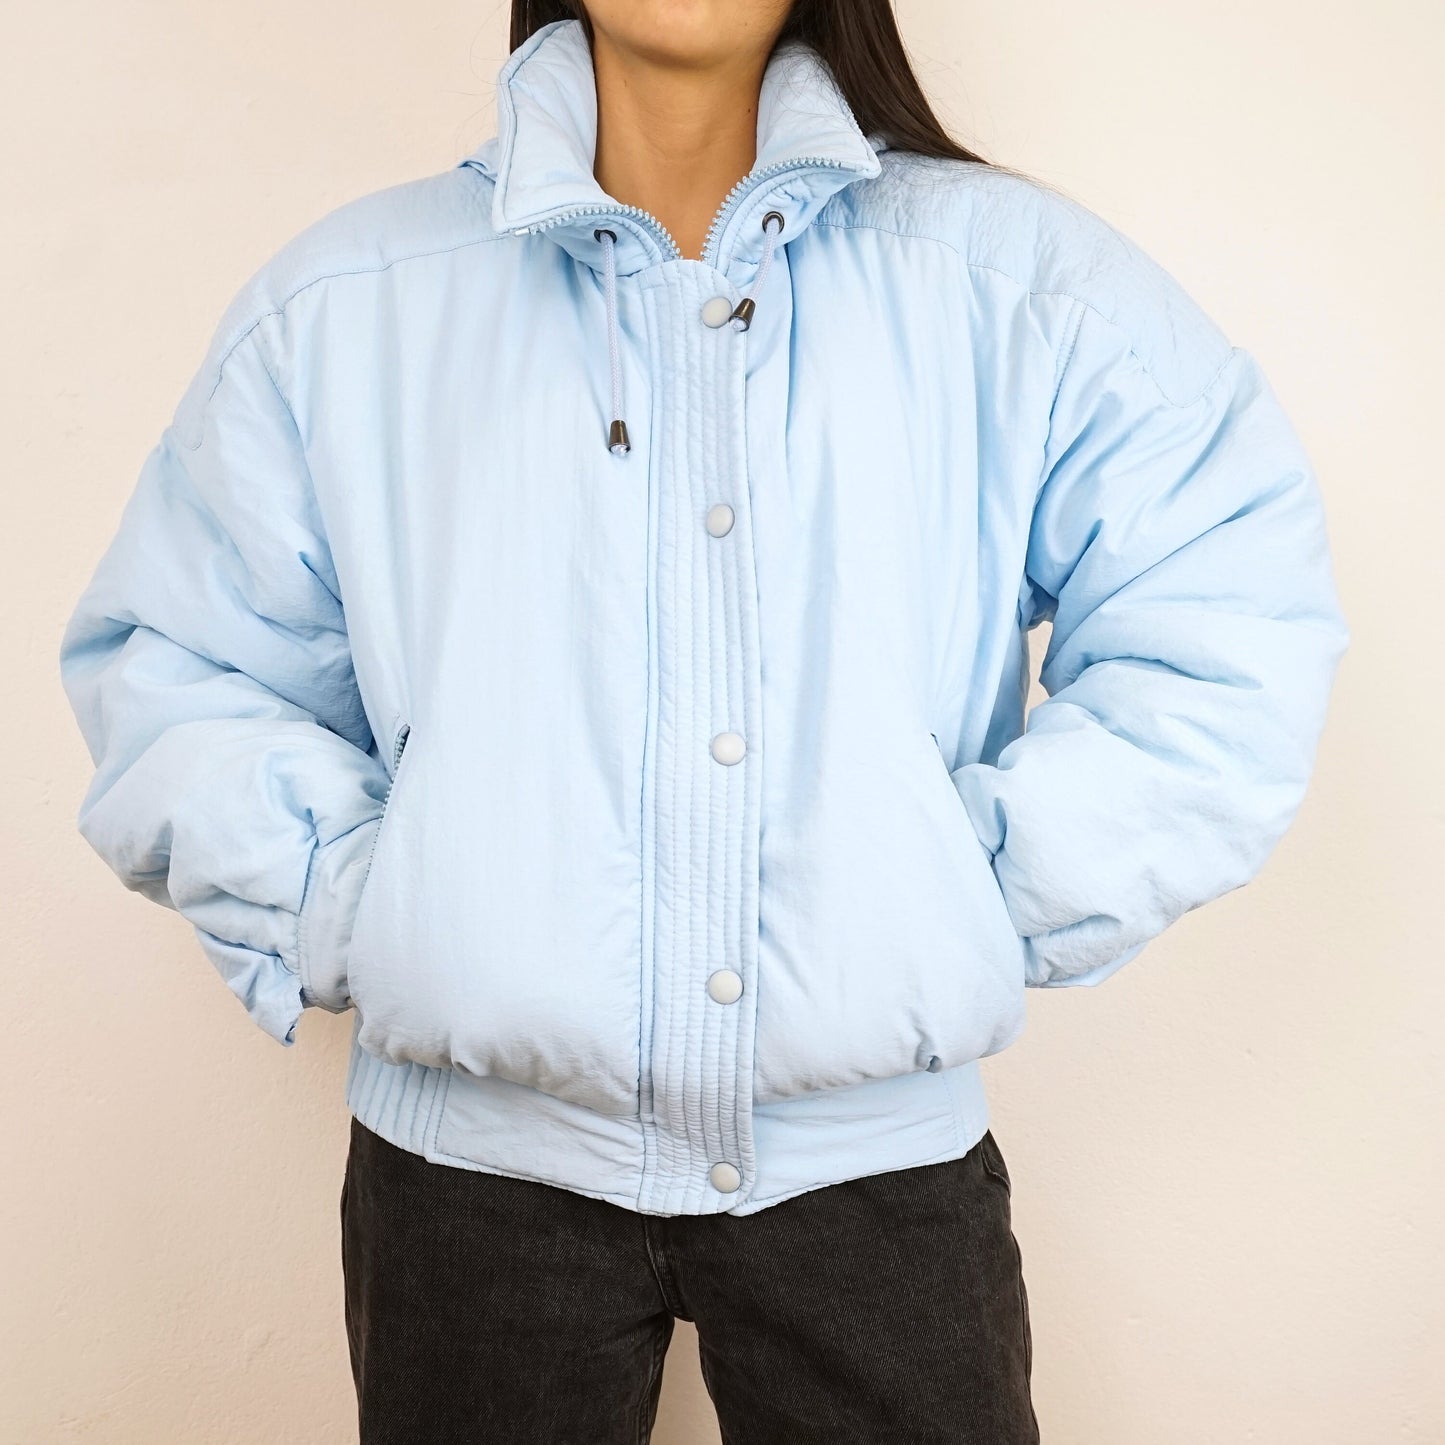 Vintage Ski Jacket Size S baby blue